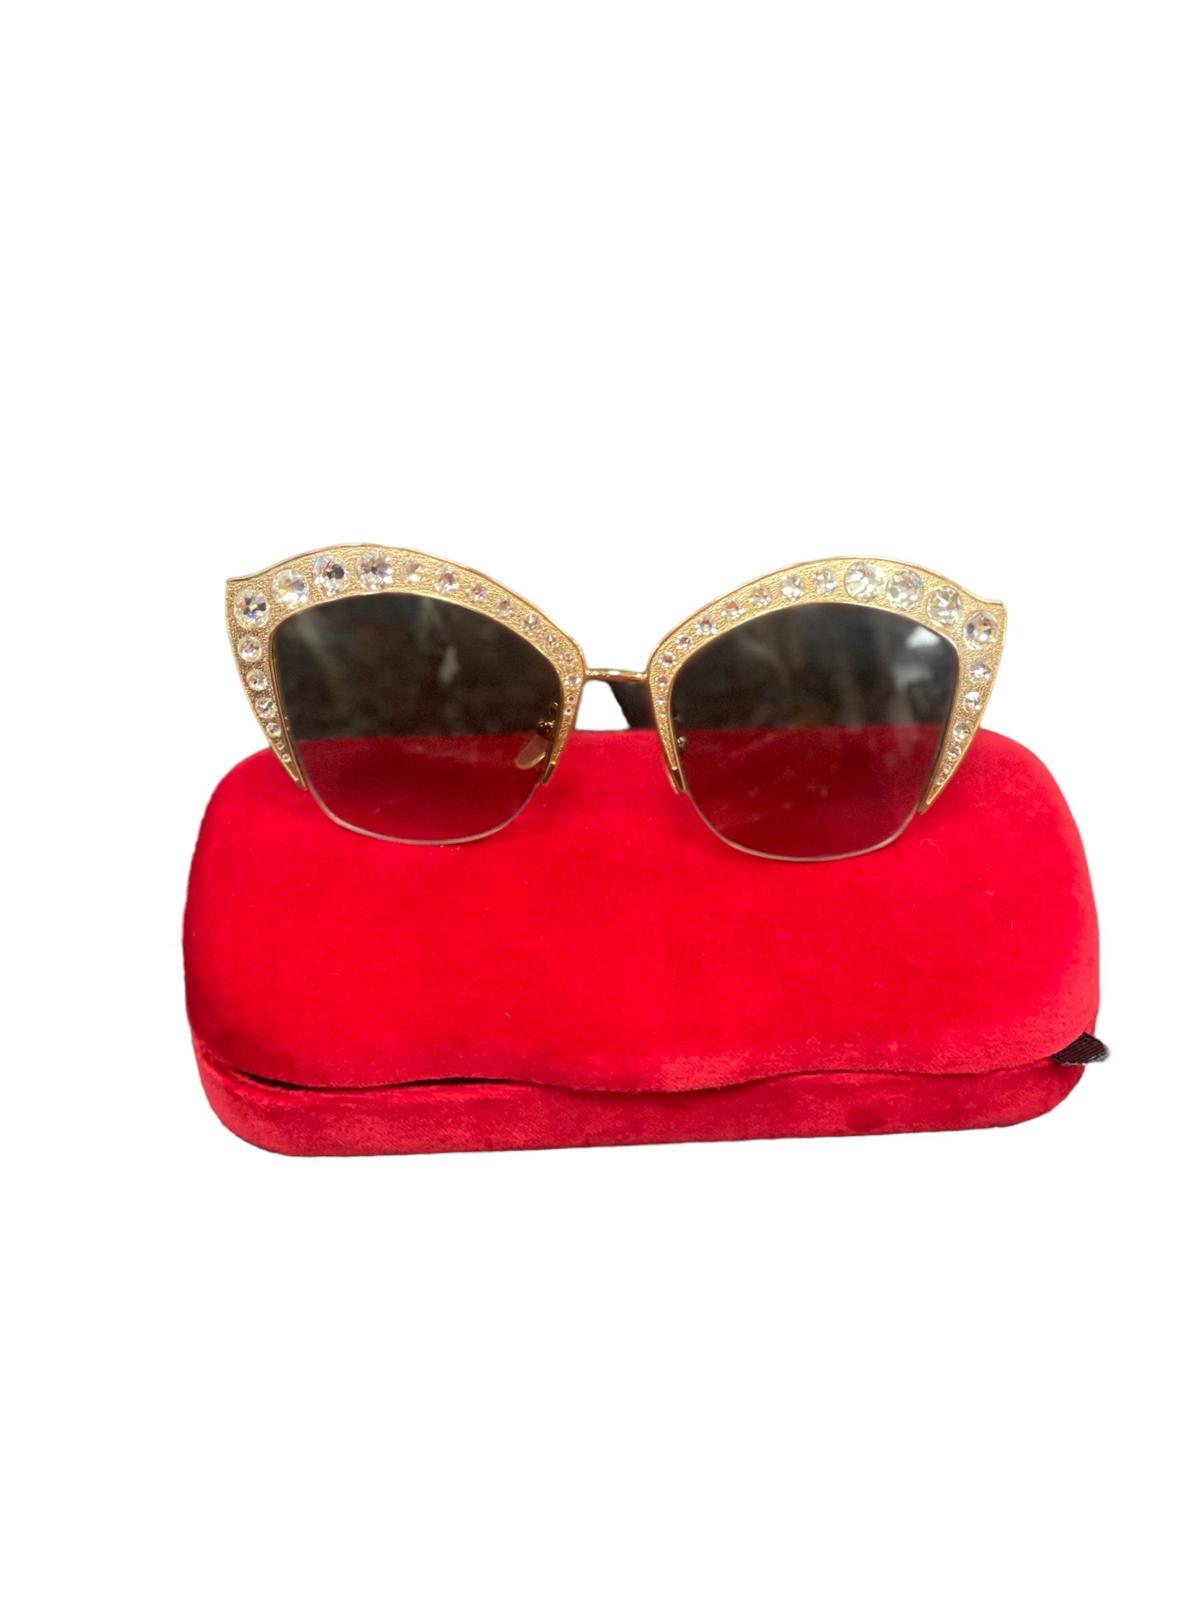 Vintage Gucci cat eye sunglasses